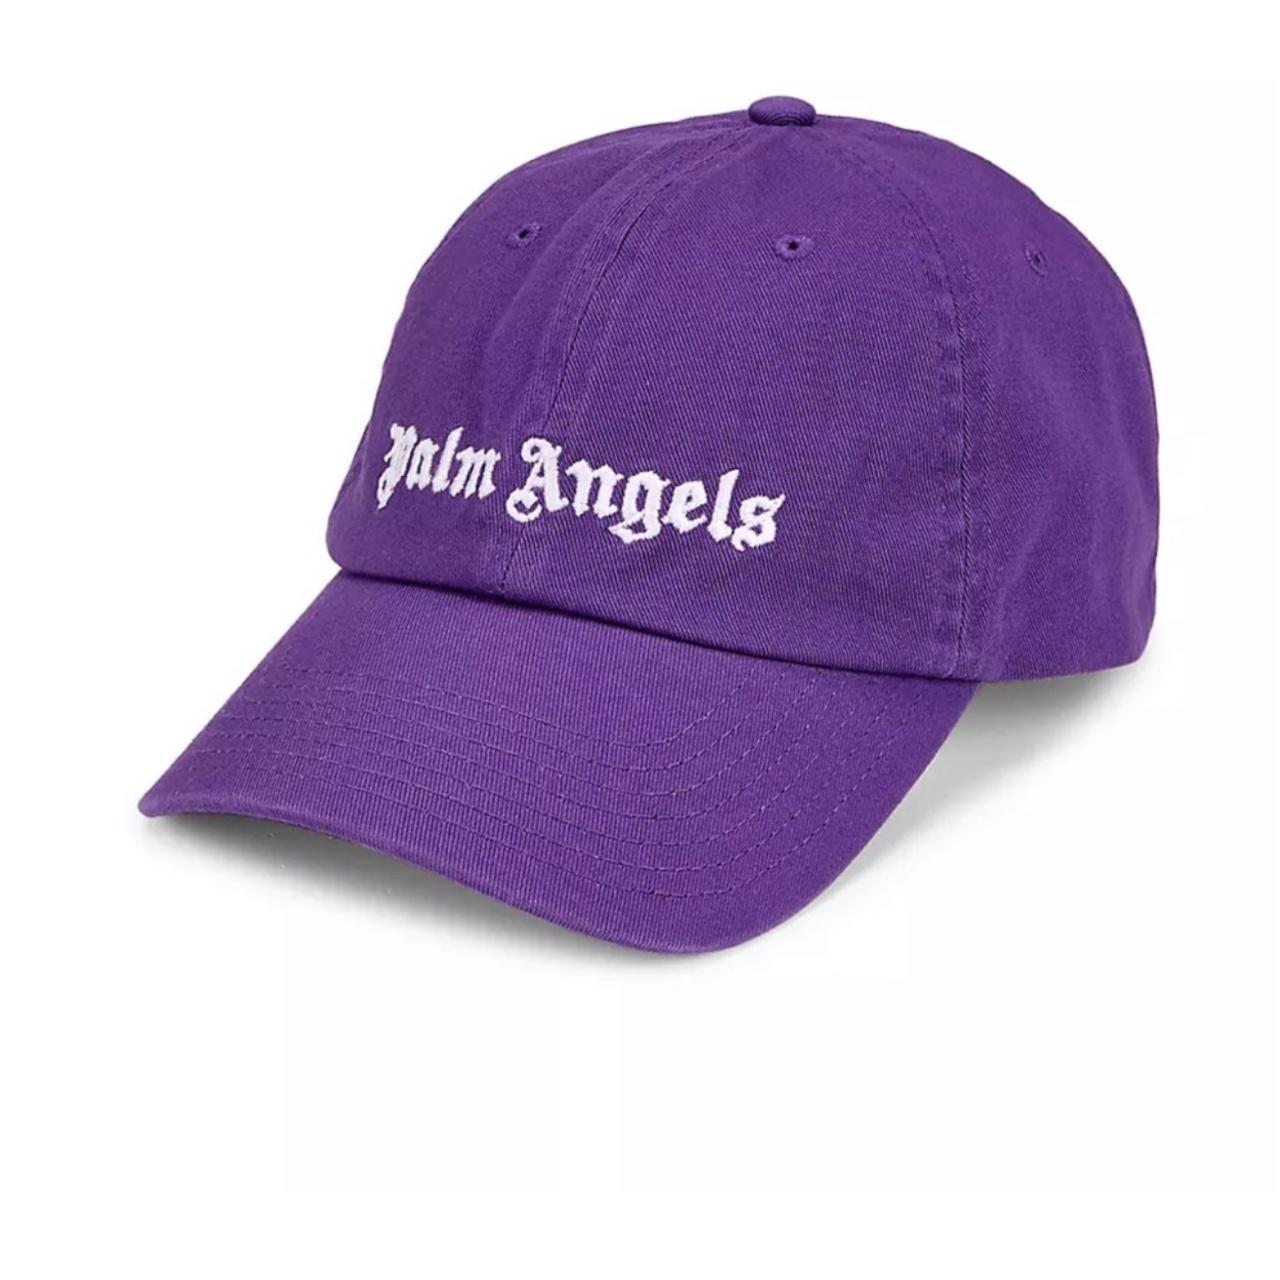 Palm angels cap - Depop